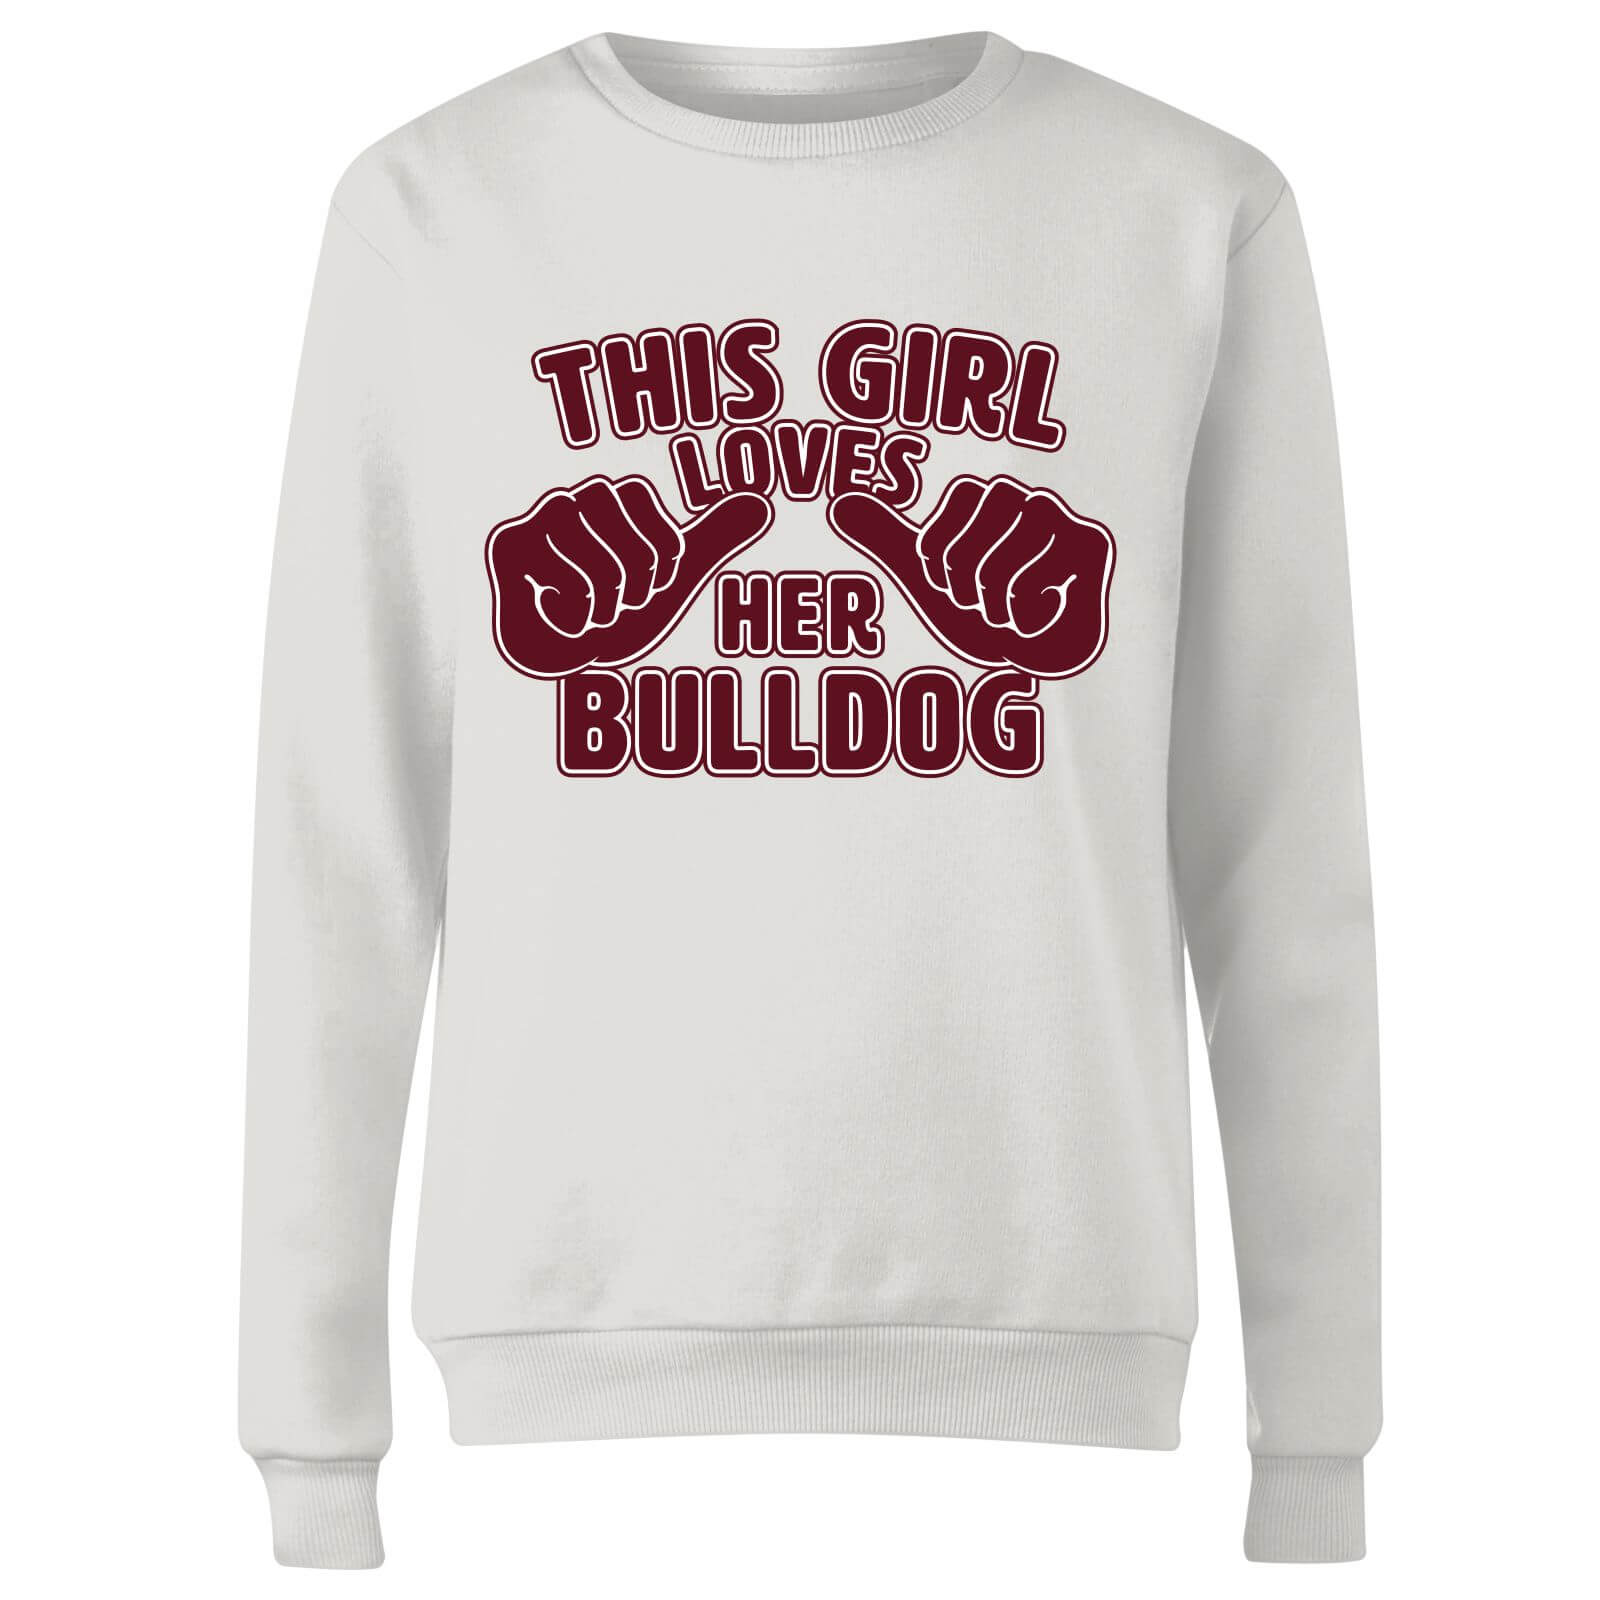 This Girl Loves Her Bulldog Women's Sweatshirt - White - M - White